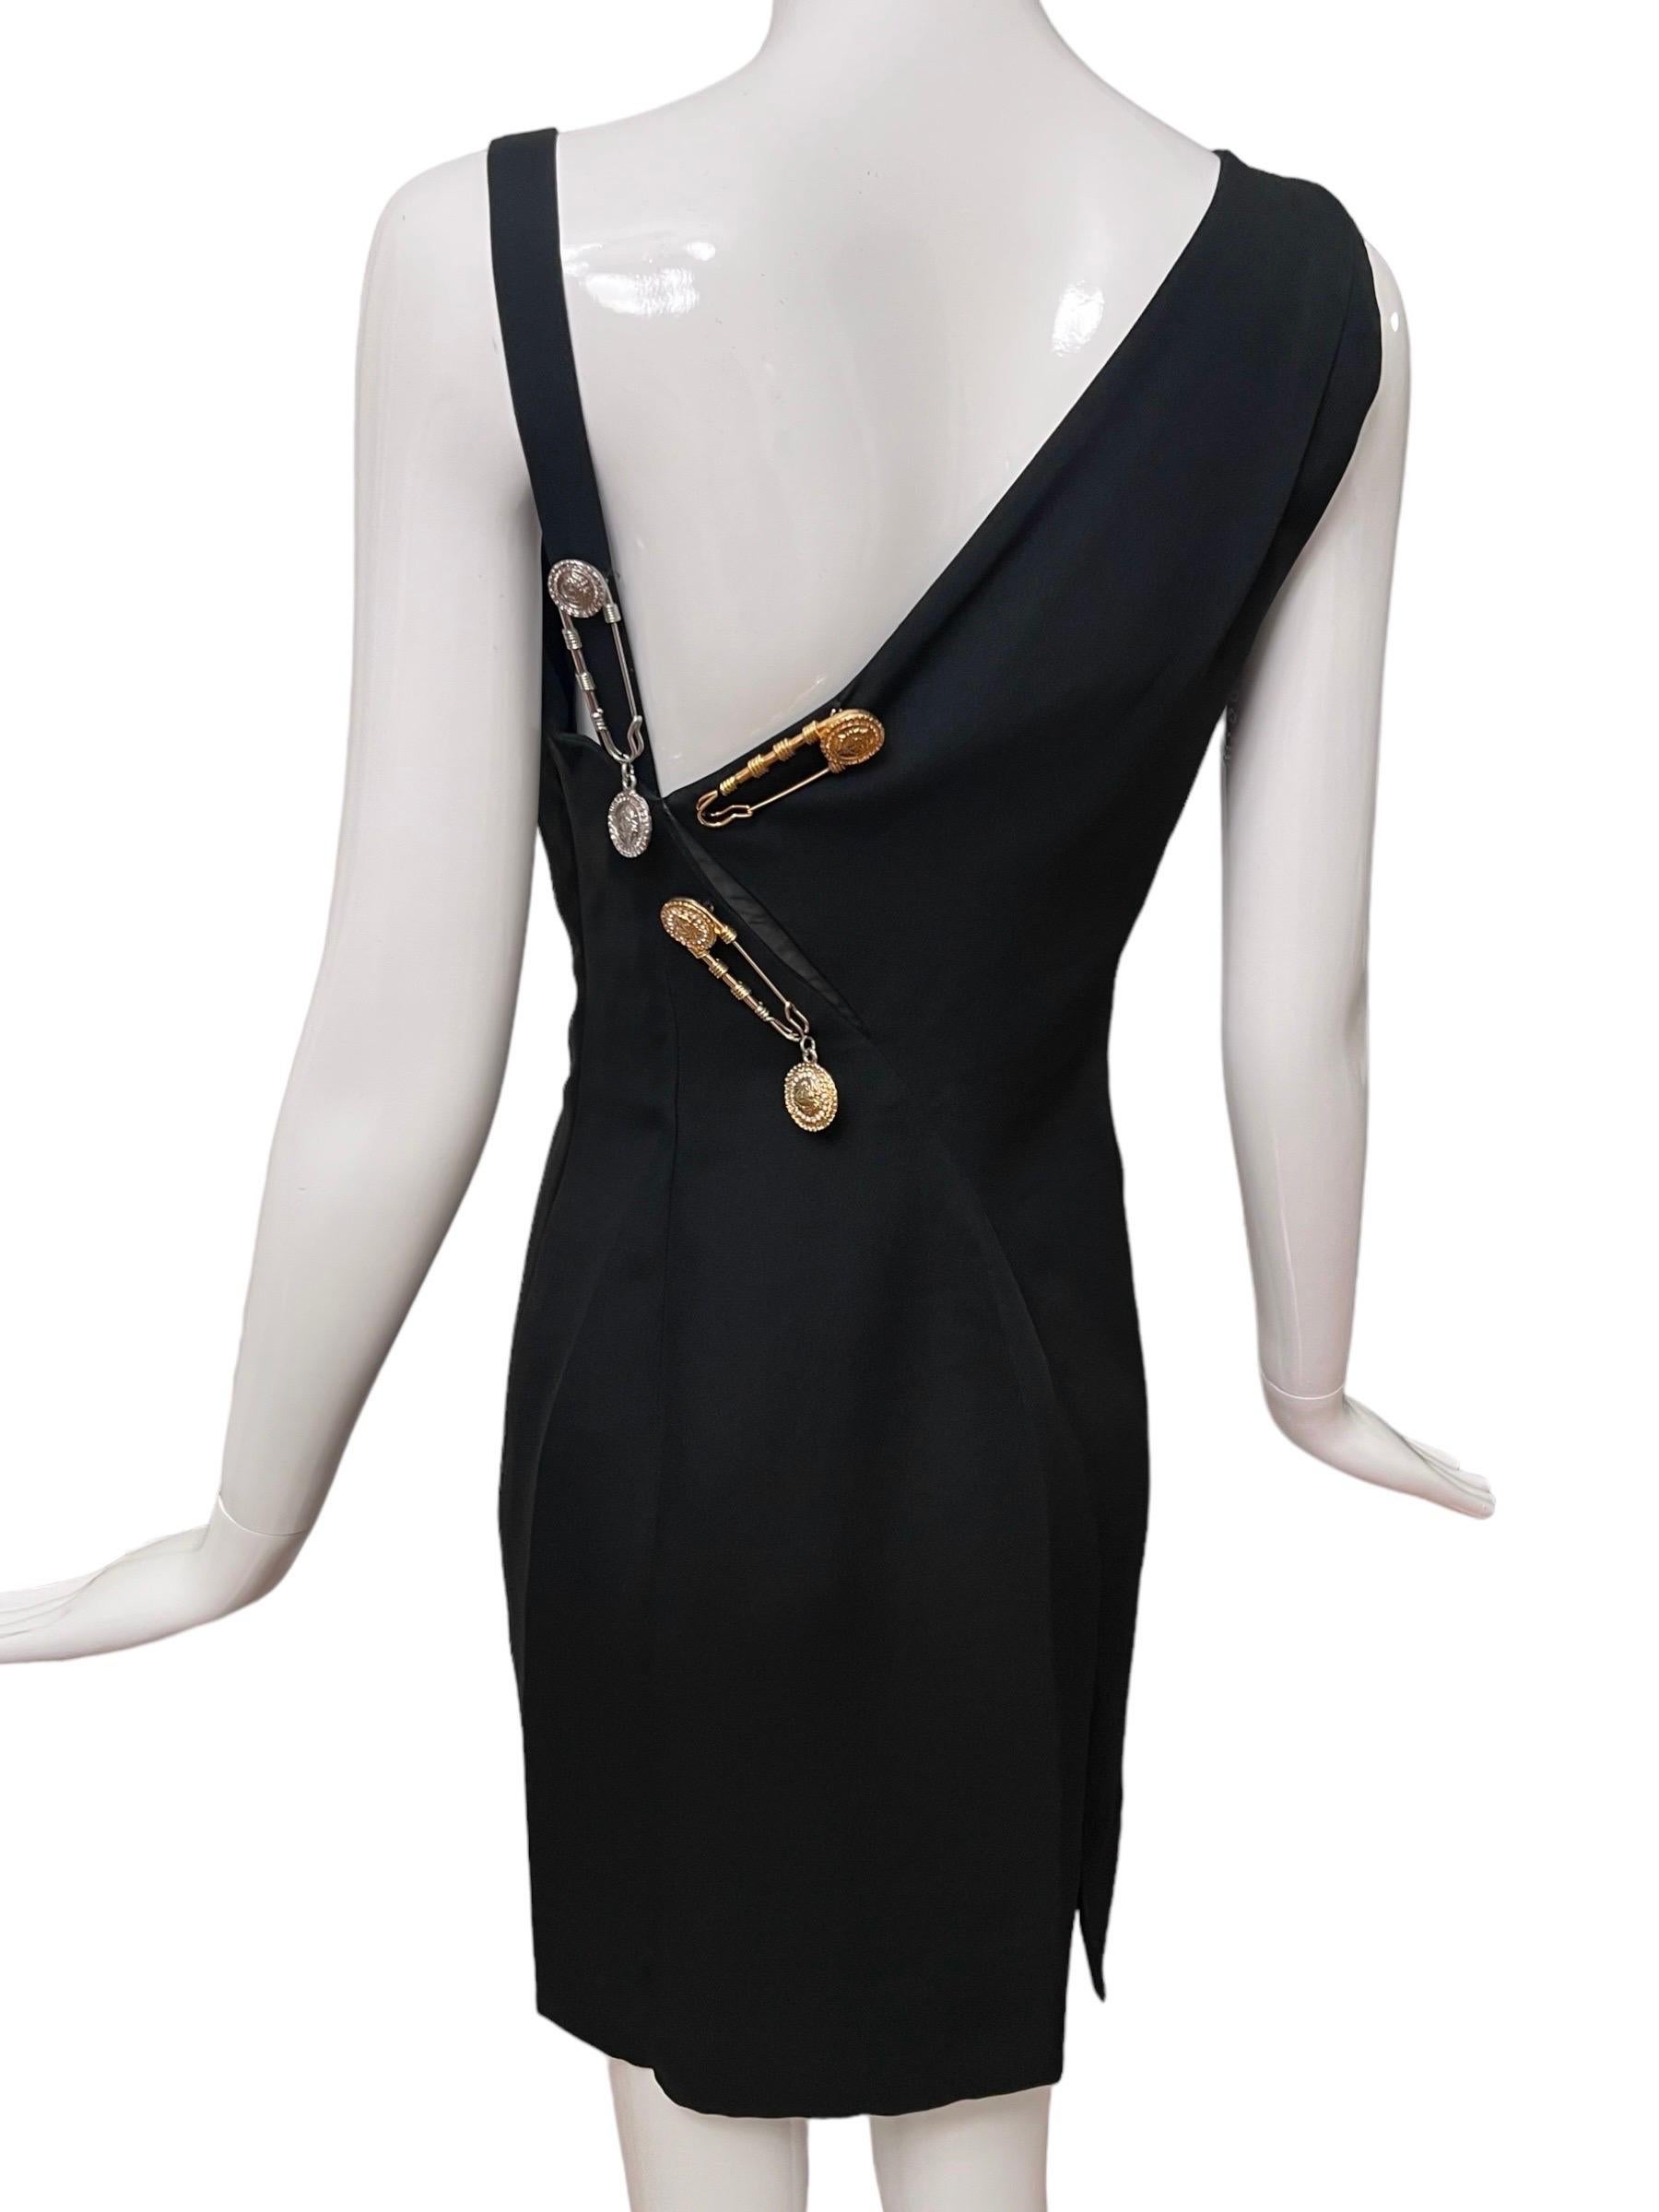 S/S 1994 Gianni Versace Safety Pin Medusa Embellished Black Mini Dress For Sale 3